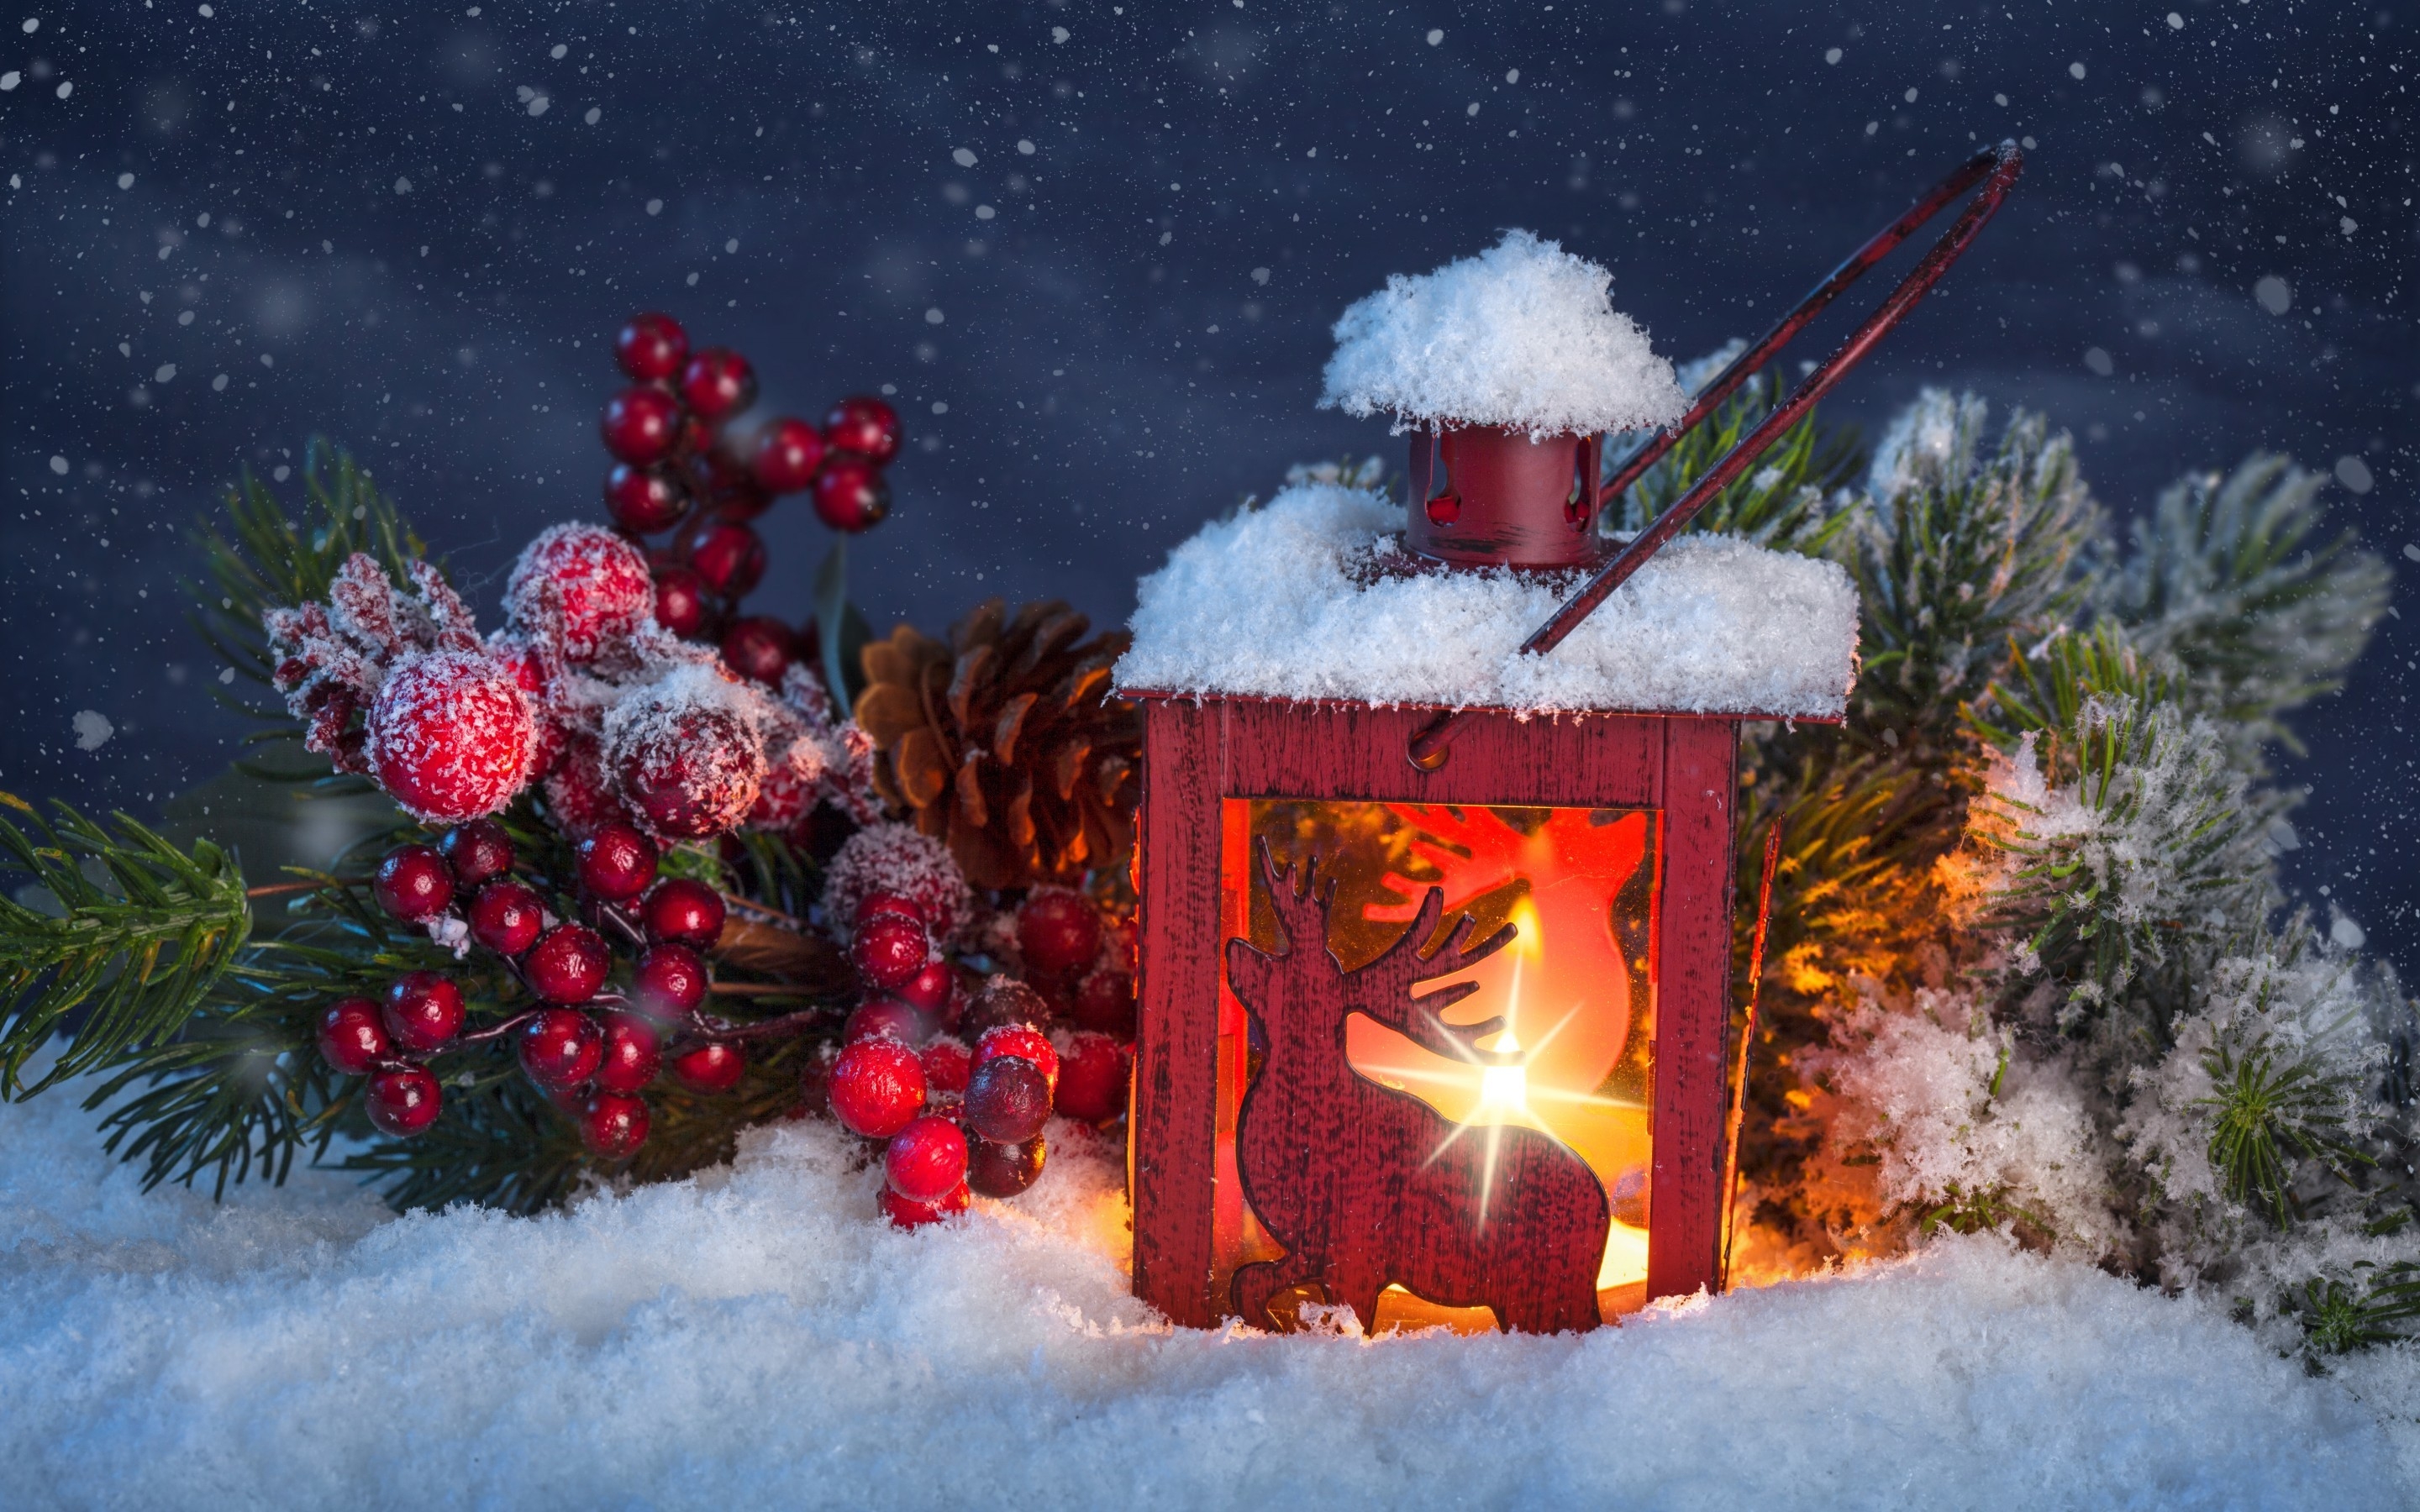 Christmas Light and Ornaments for 2880 x 1800 Retina Display resolution